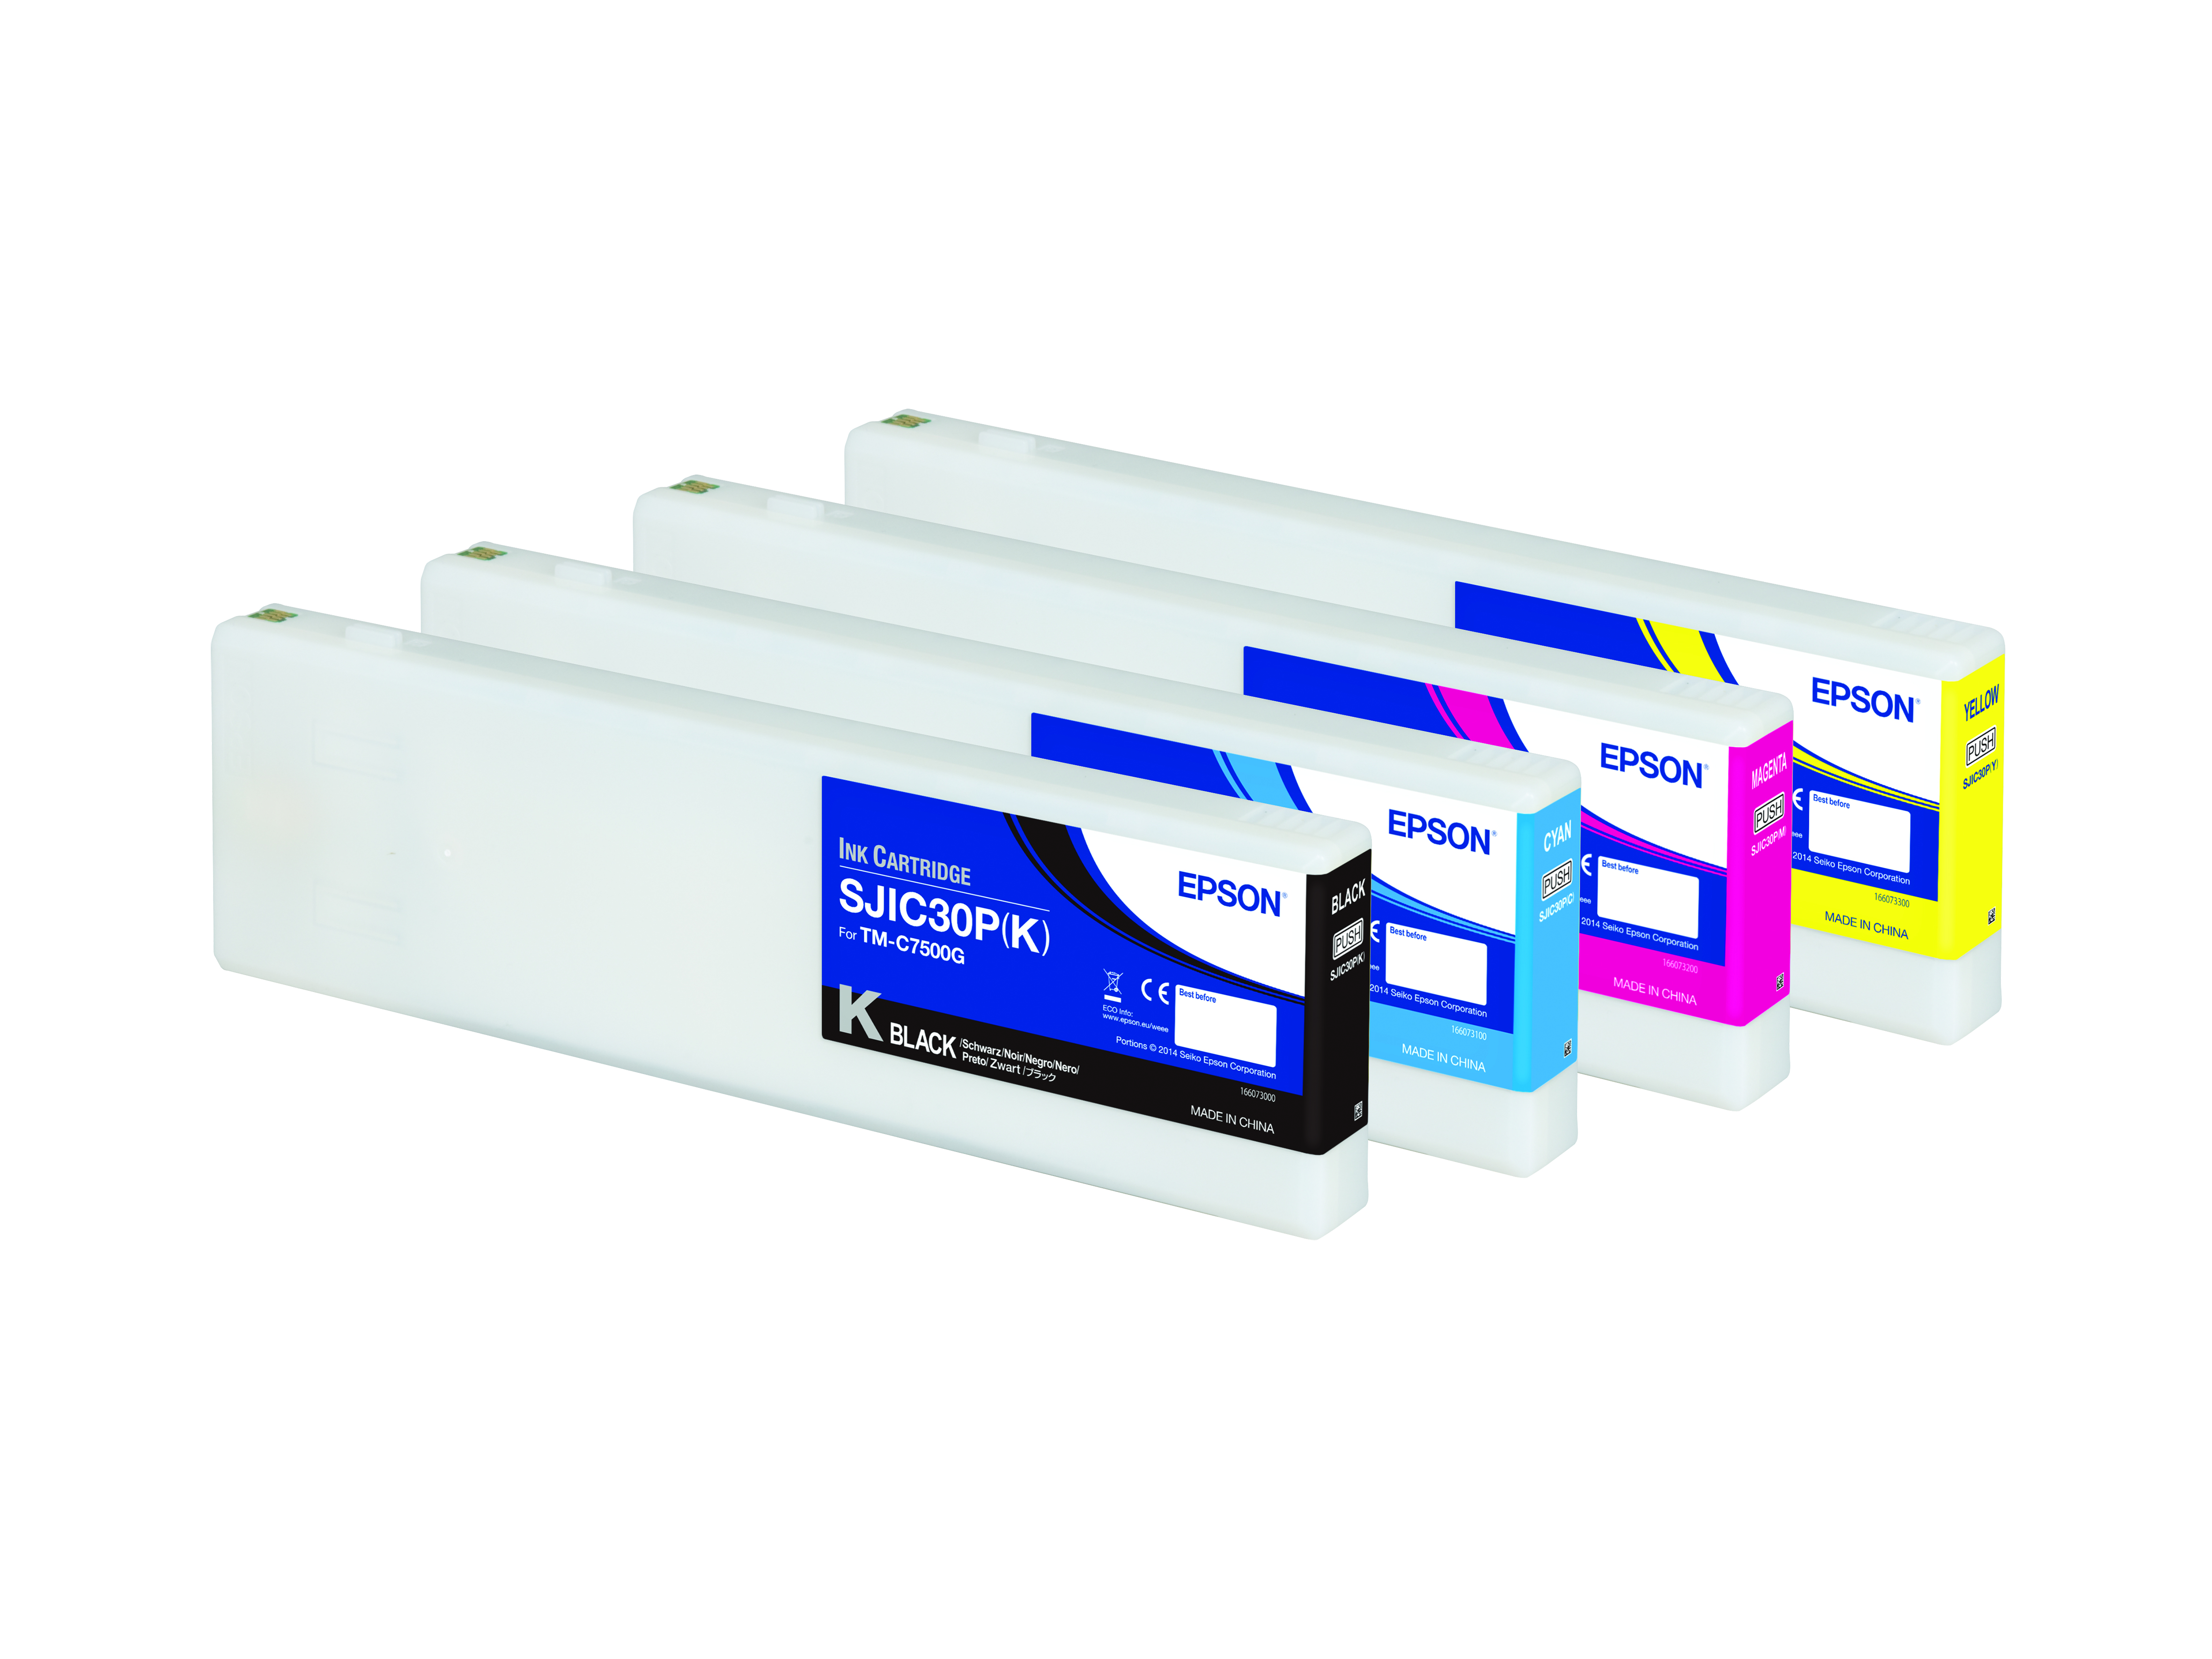 Epson ColorWorks Ink Cartridges